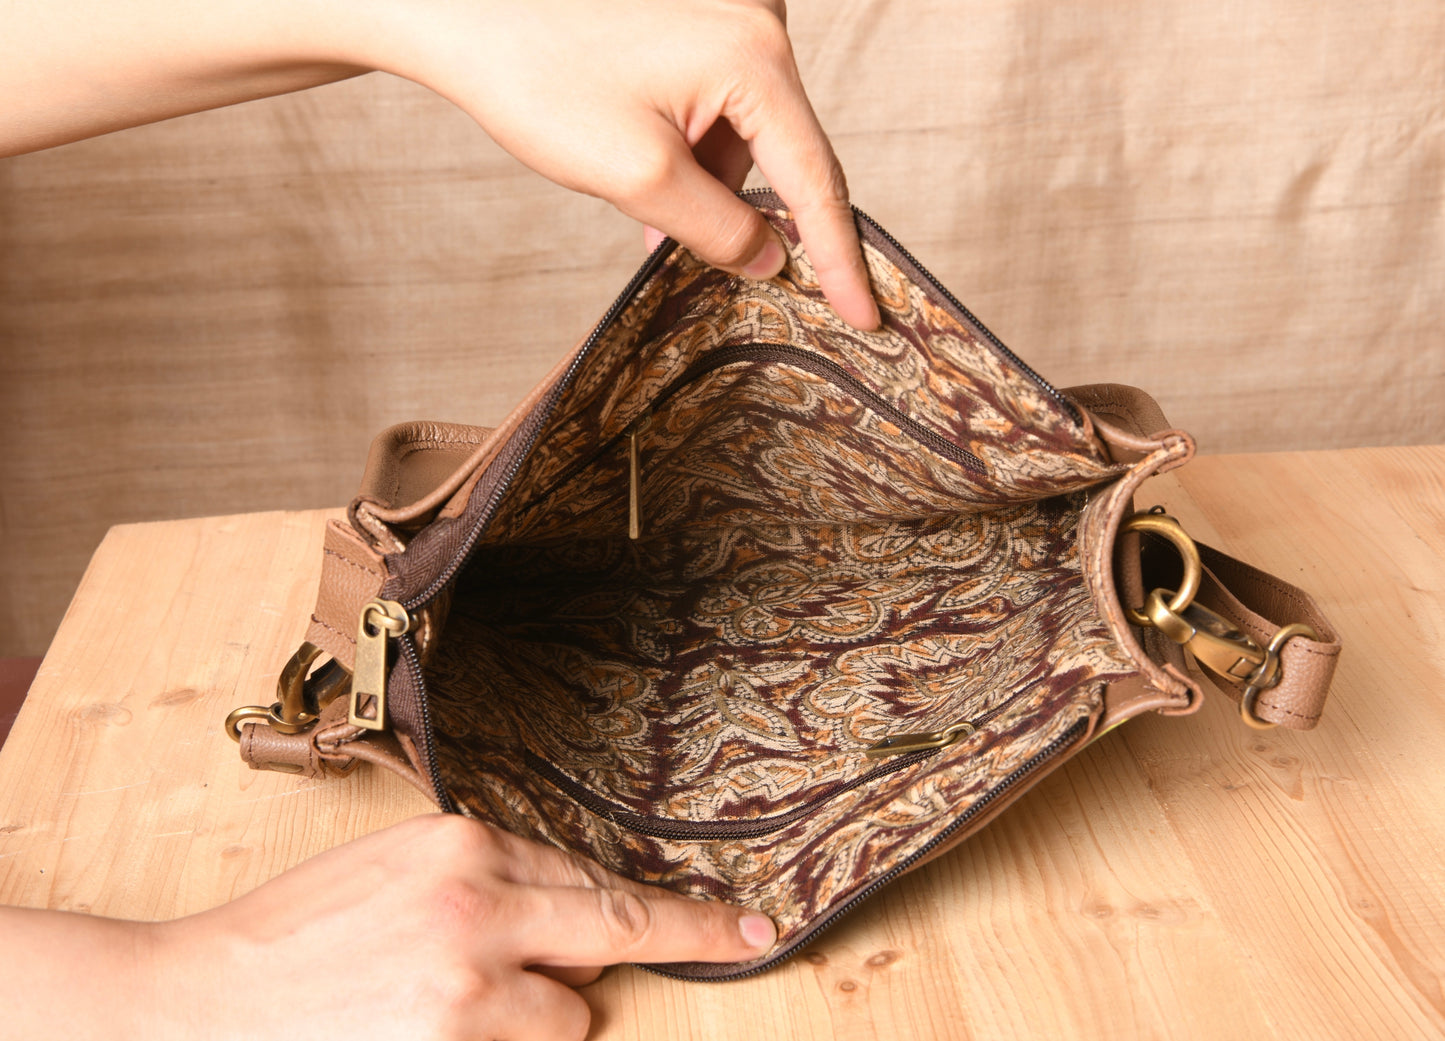 Cleopatra Bag (Handpainted)